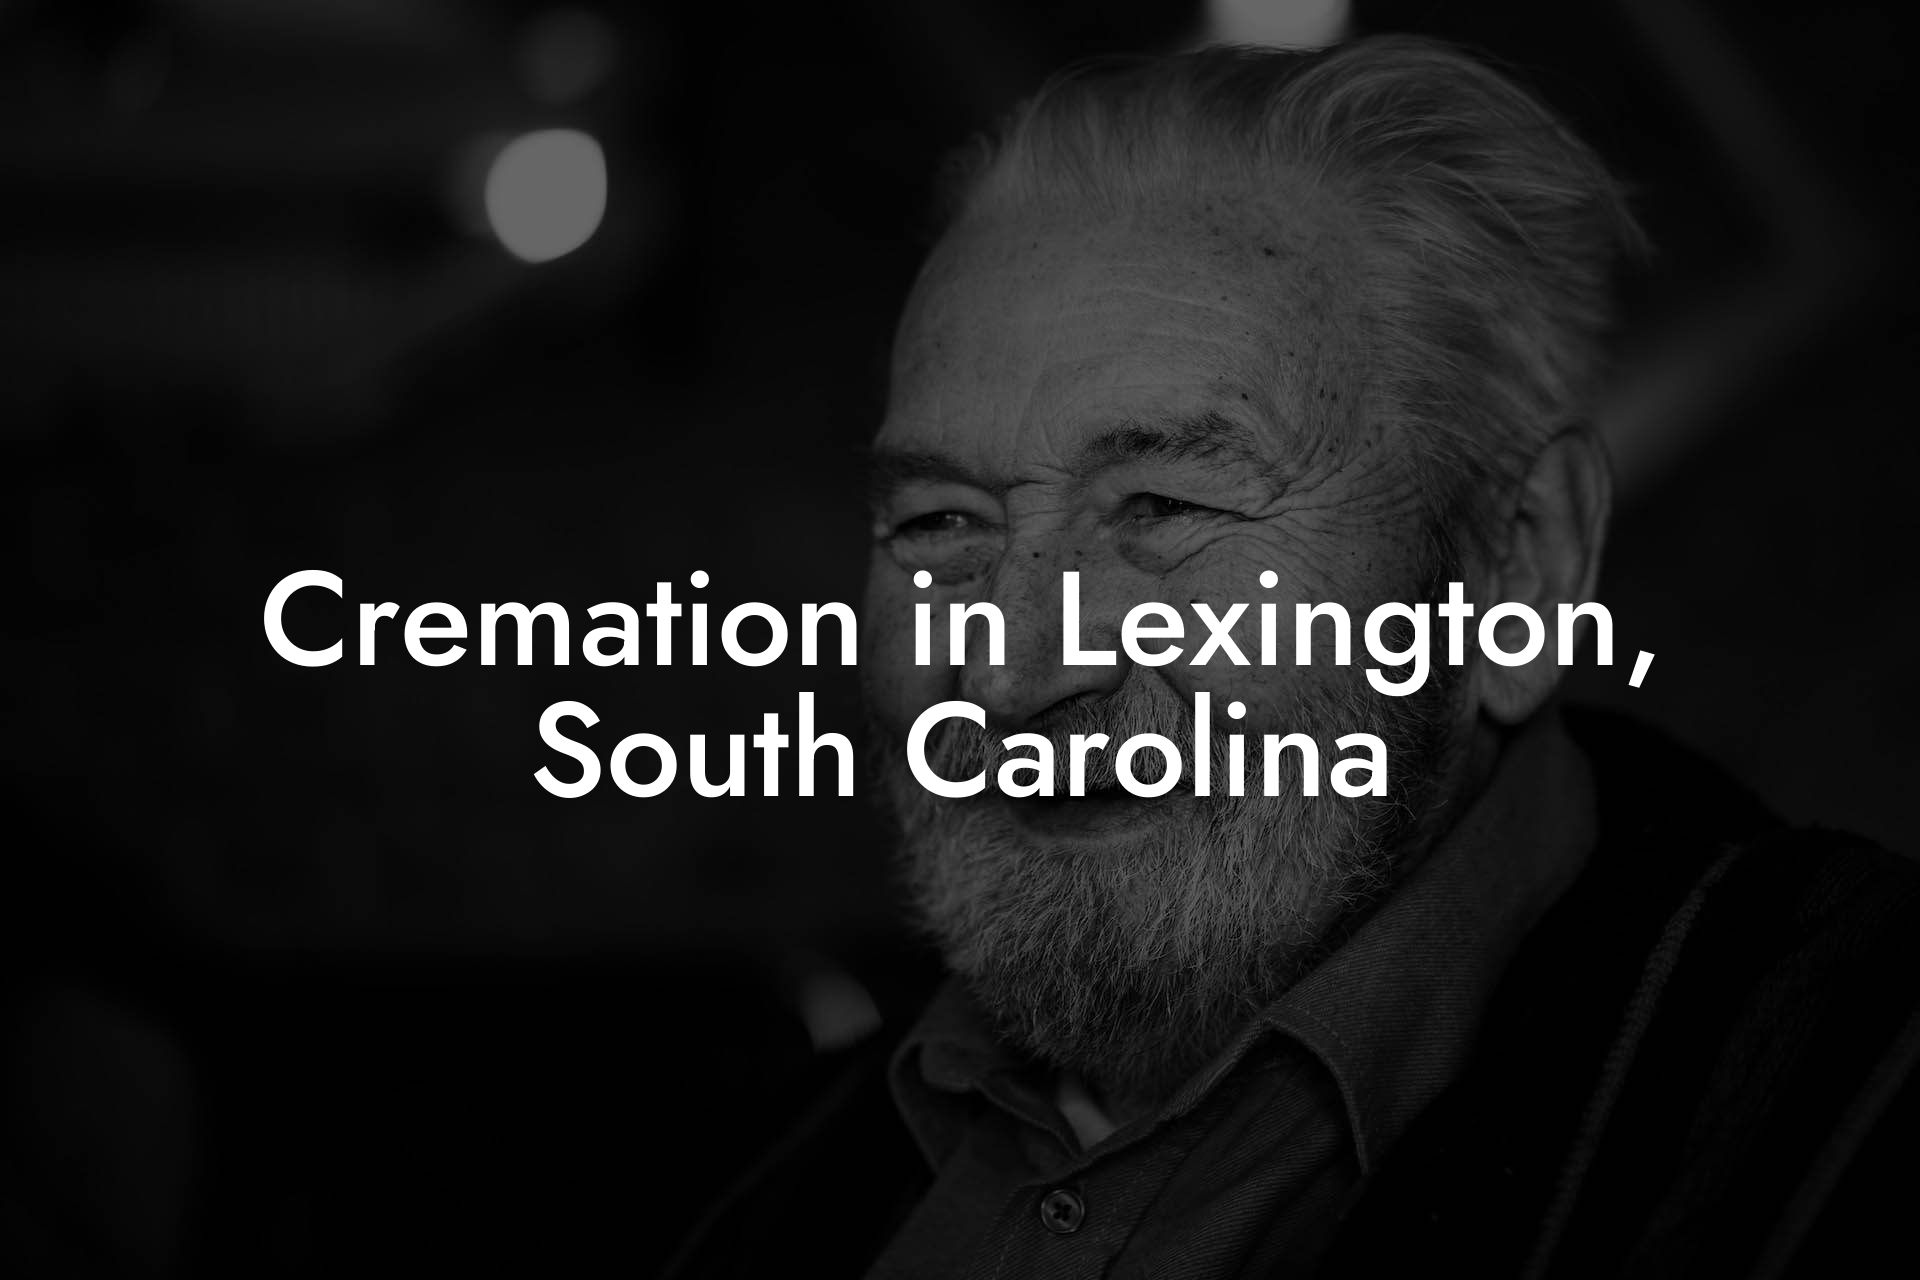 Cremation in Lexington, South Carolina